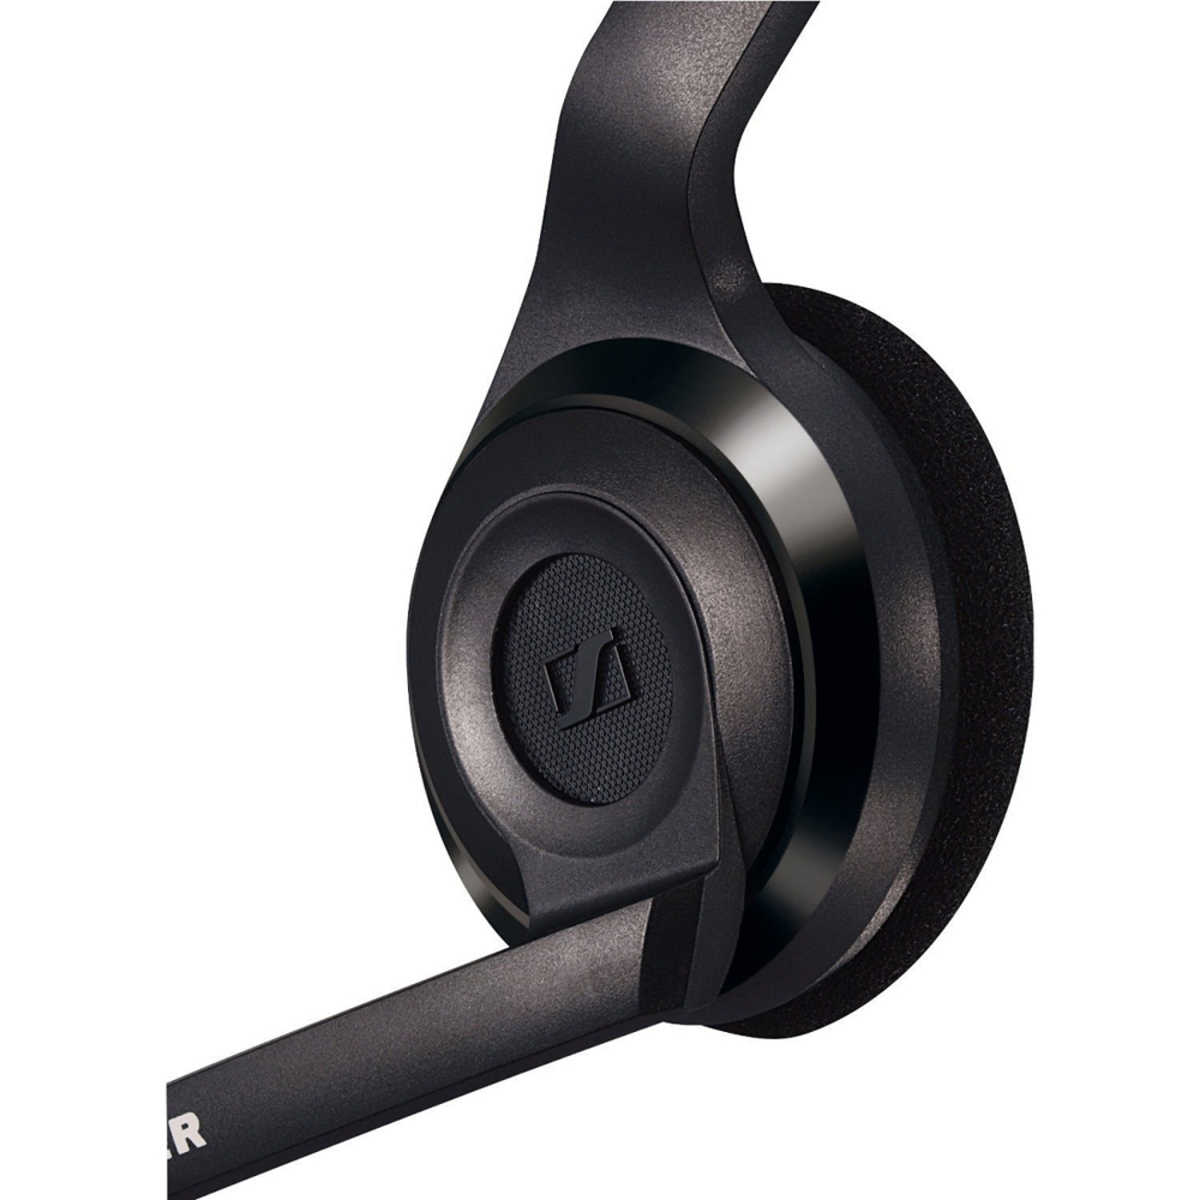 Sennheiser Headset PC3 Chat Black